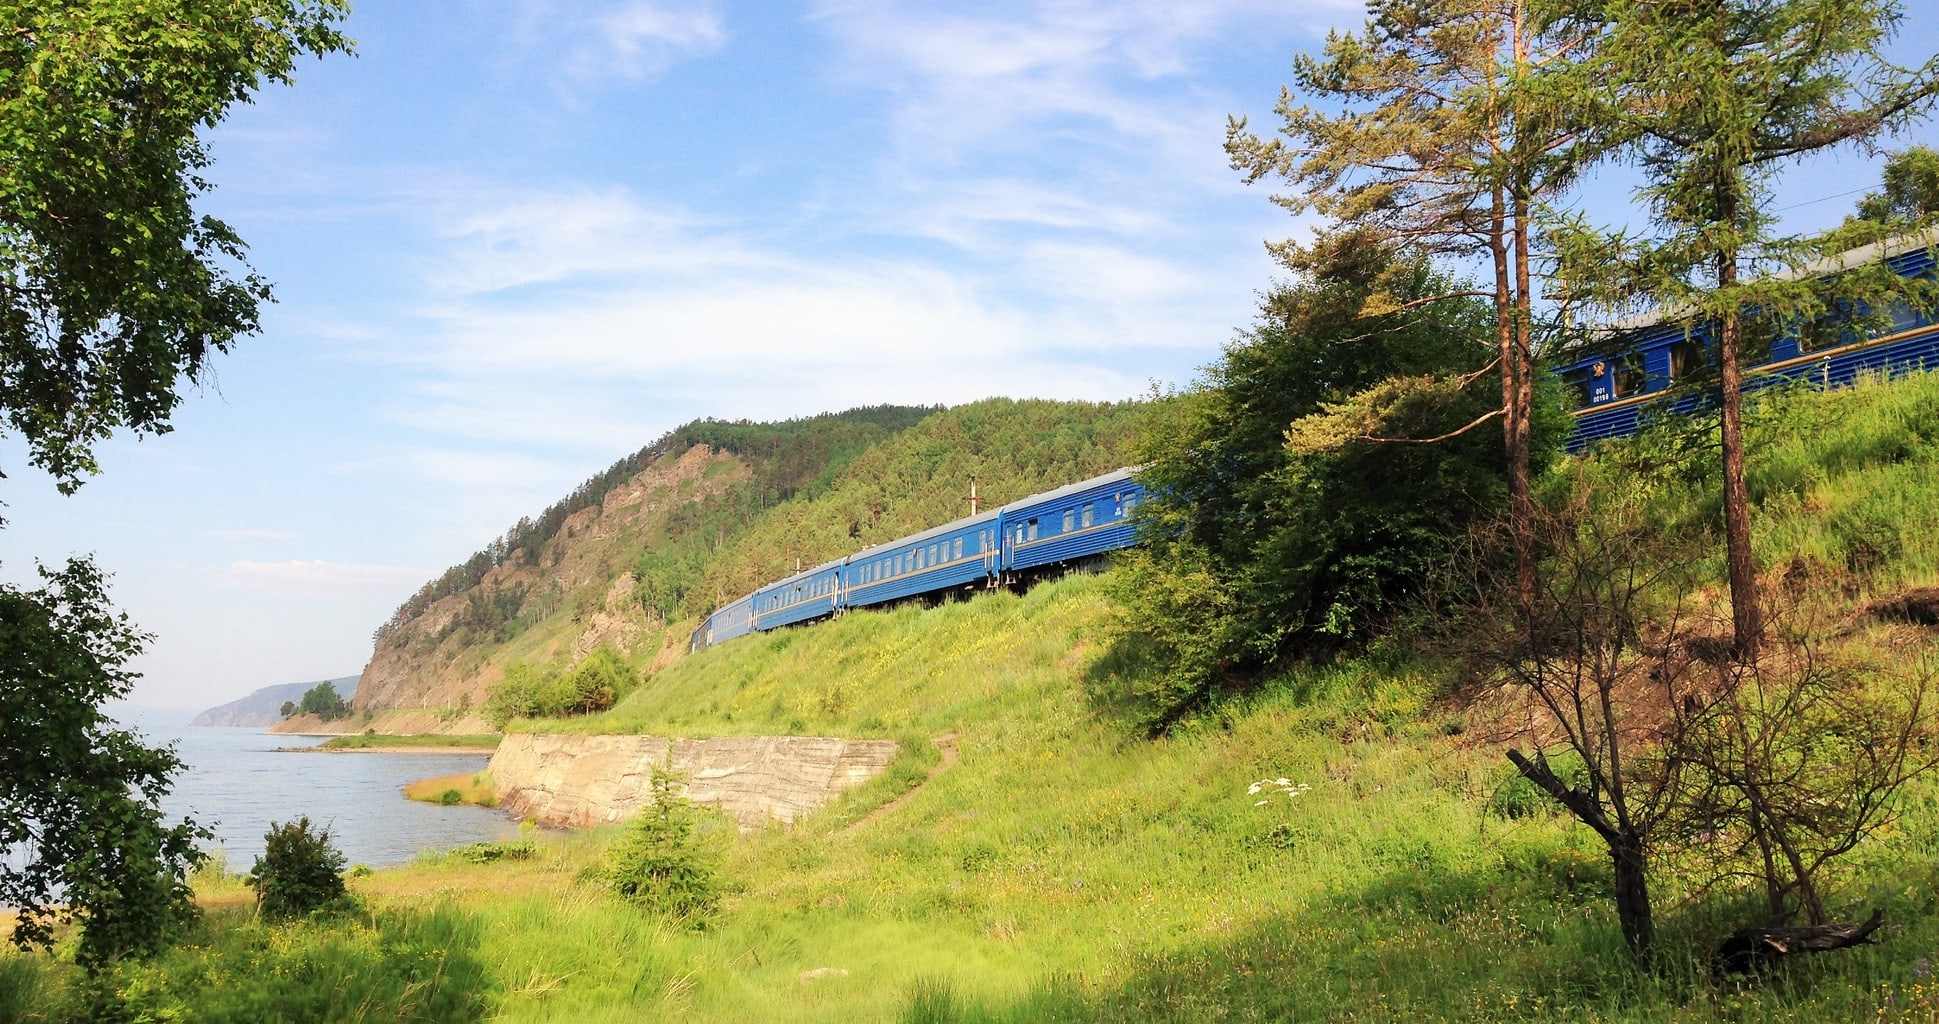 The Golden Eagle Trans-Siberian Express